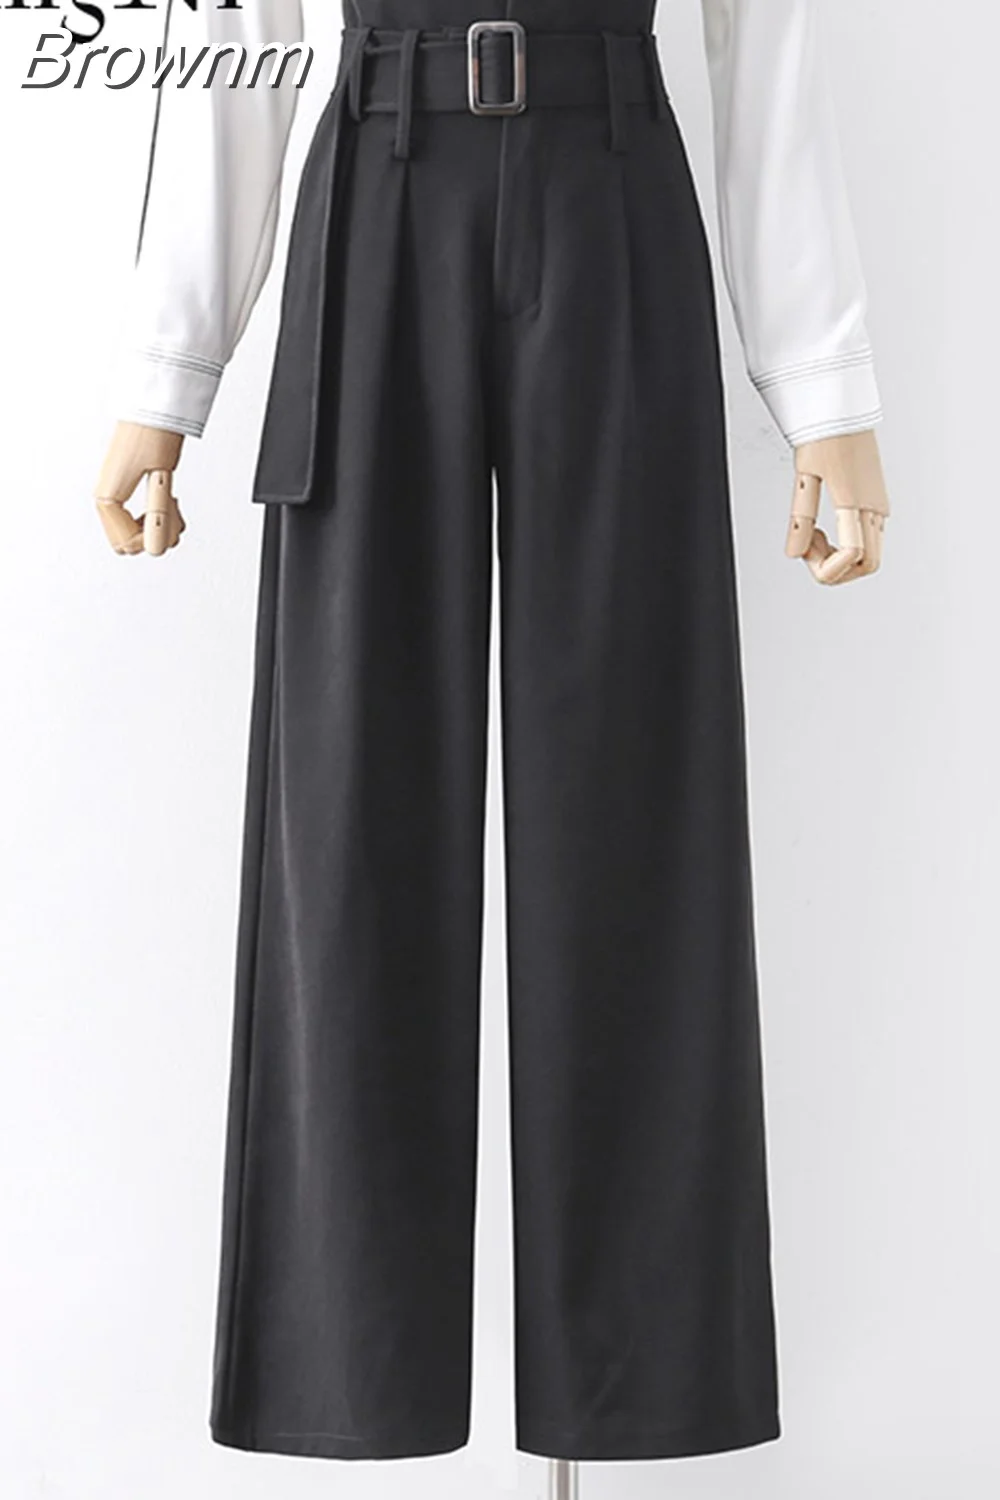 Brownm Female High Waist Wide Leg Pants Loose Casual Belt Fashion 2023 Spring Autumn Long Suit Pants Womens Black Trousers OL